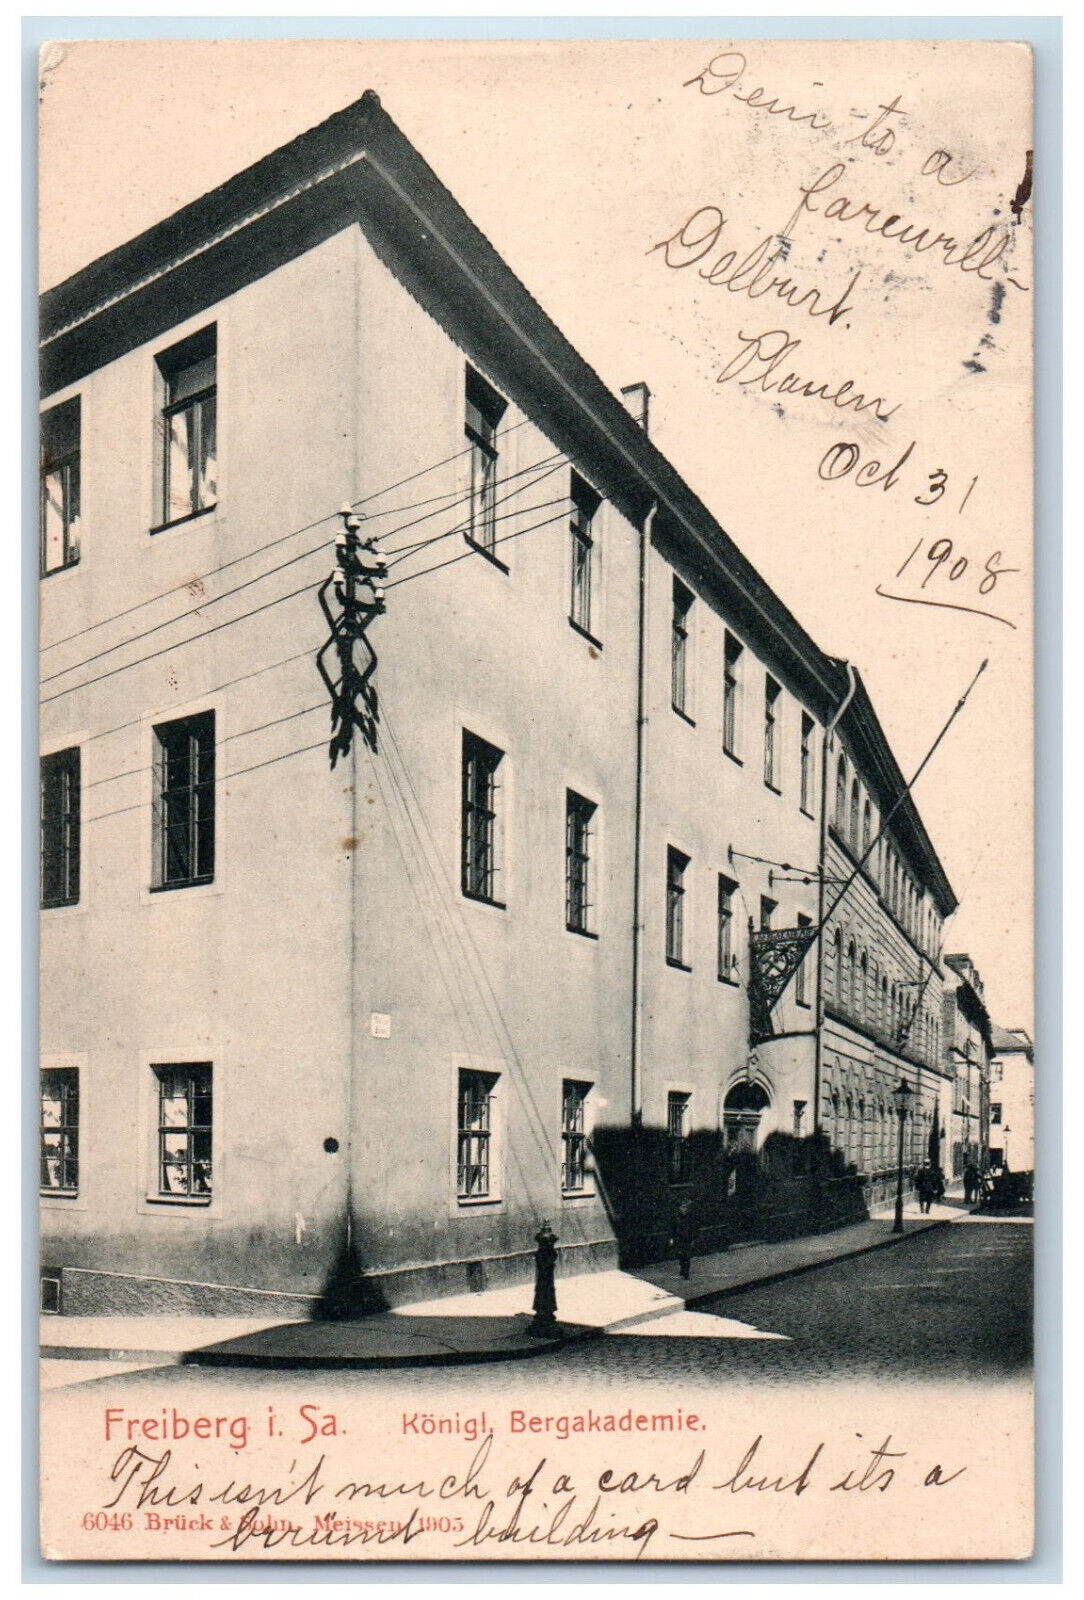 1908 Building View Konigl Bergakademie Freiberg I. Sa. Germany Posted Postcard